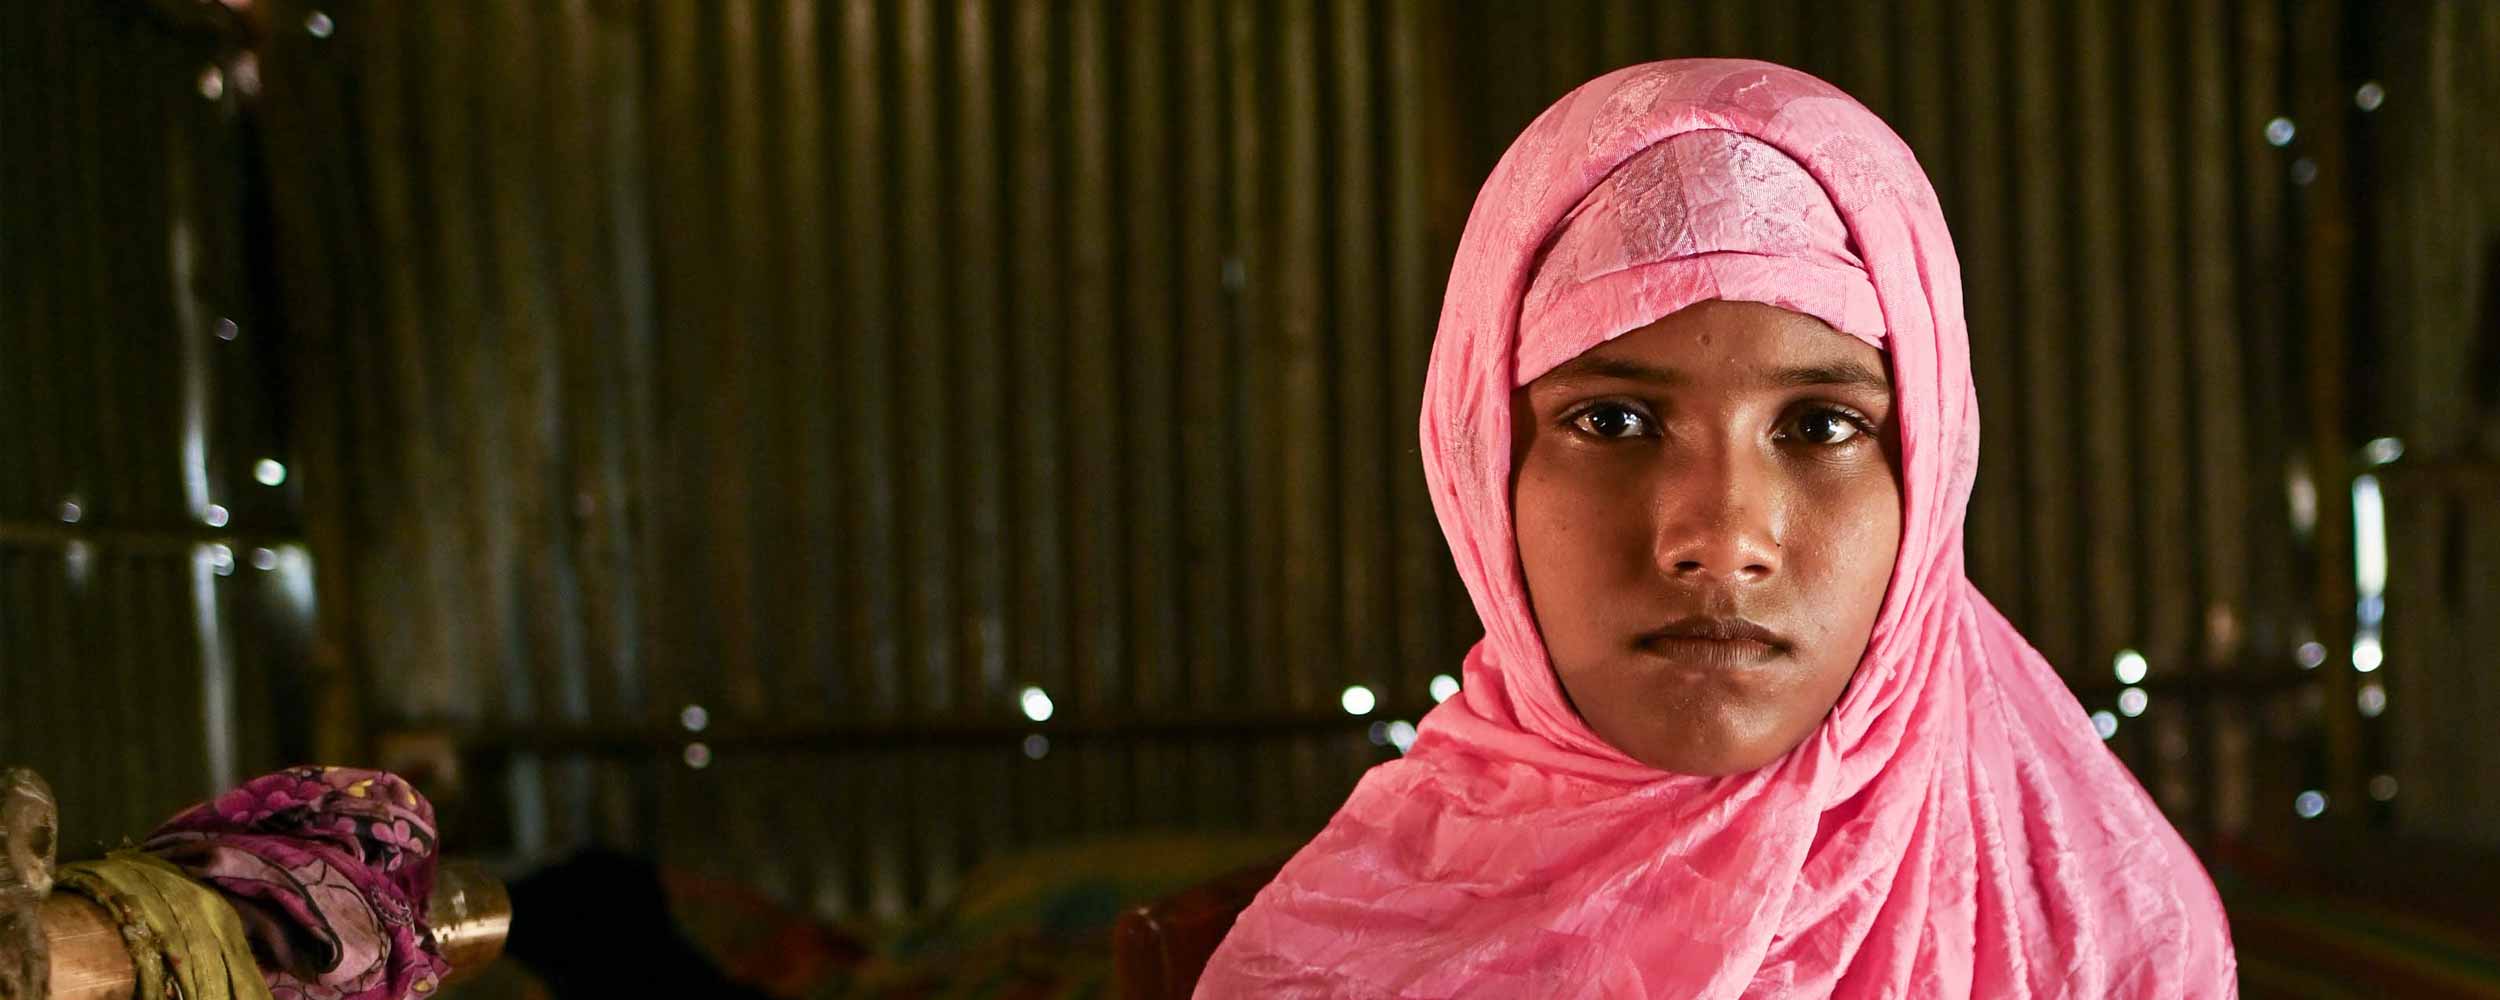 Jente fra Bangladesh